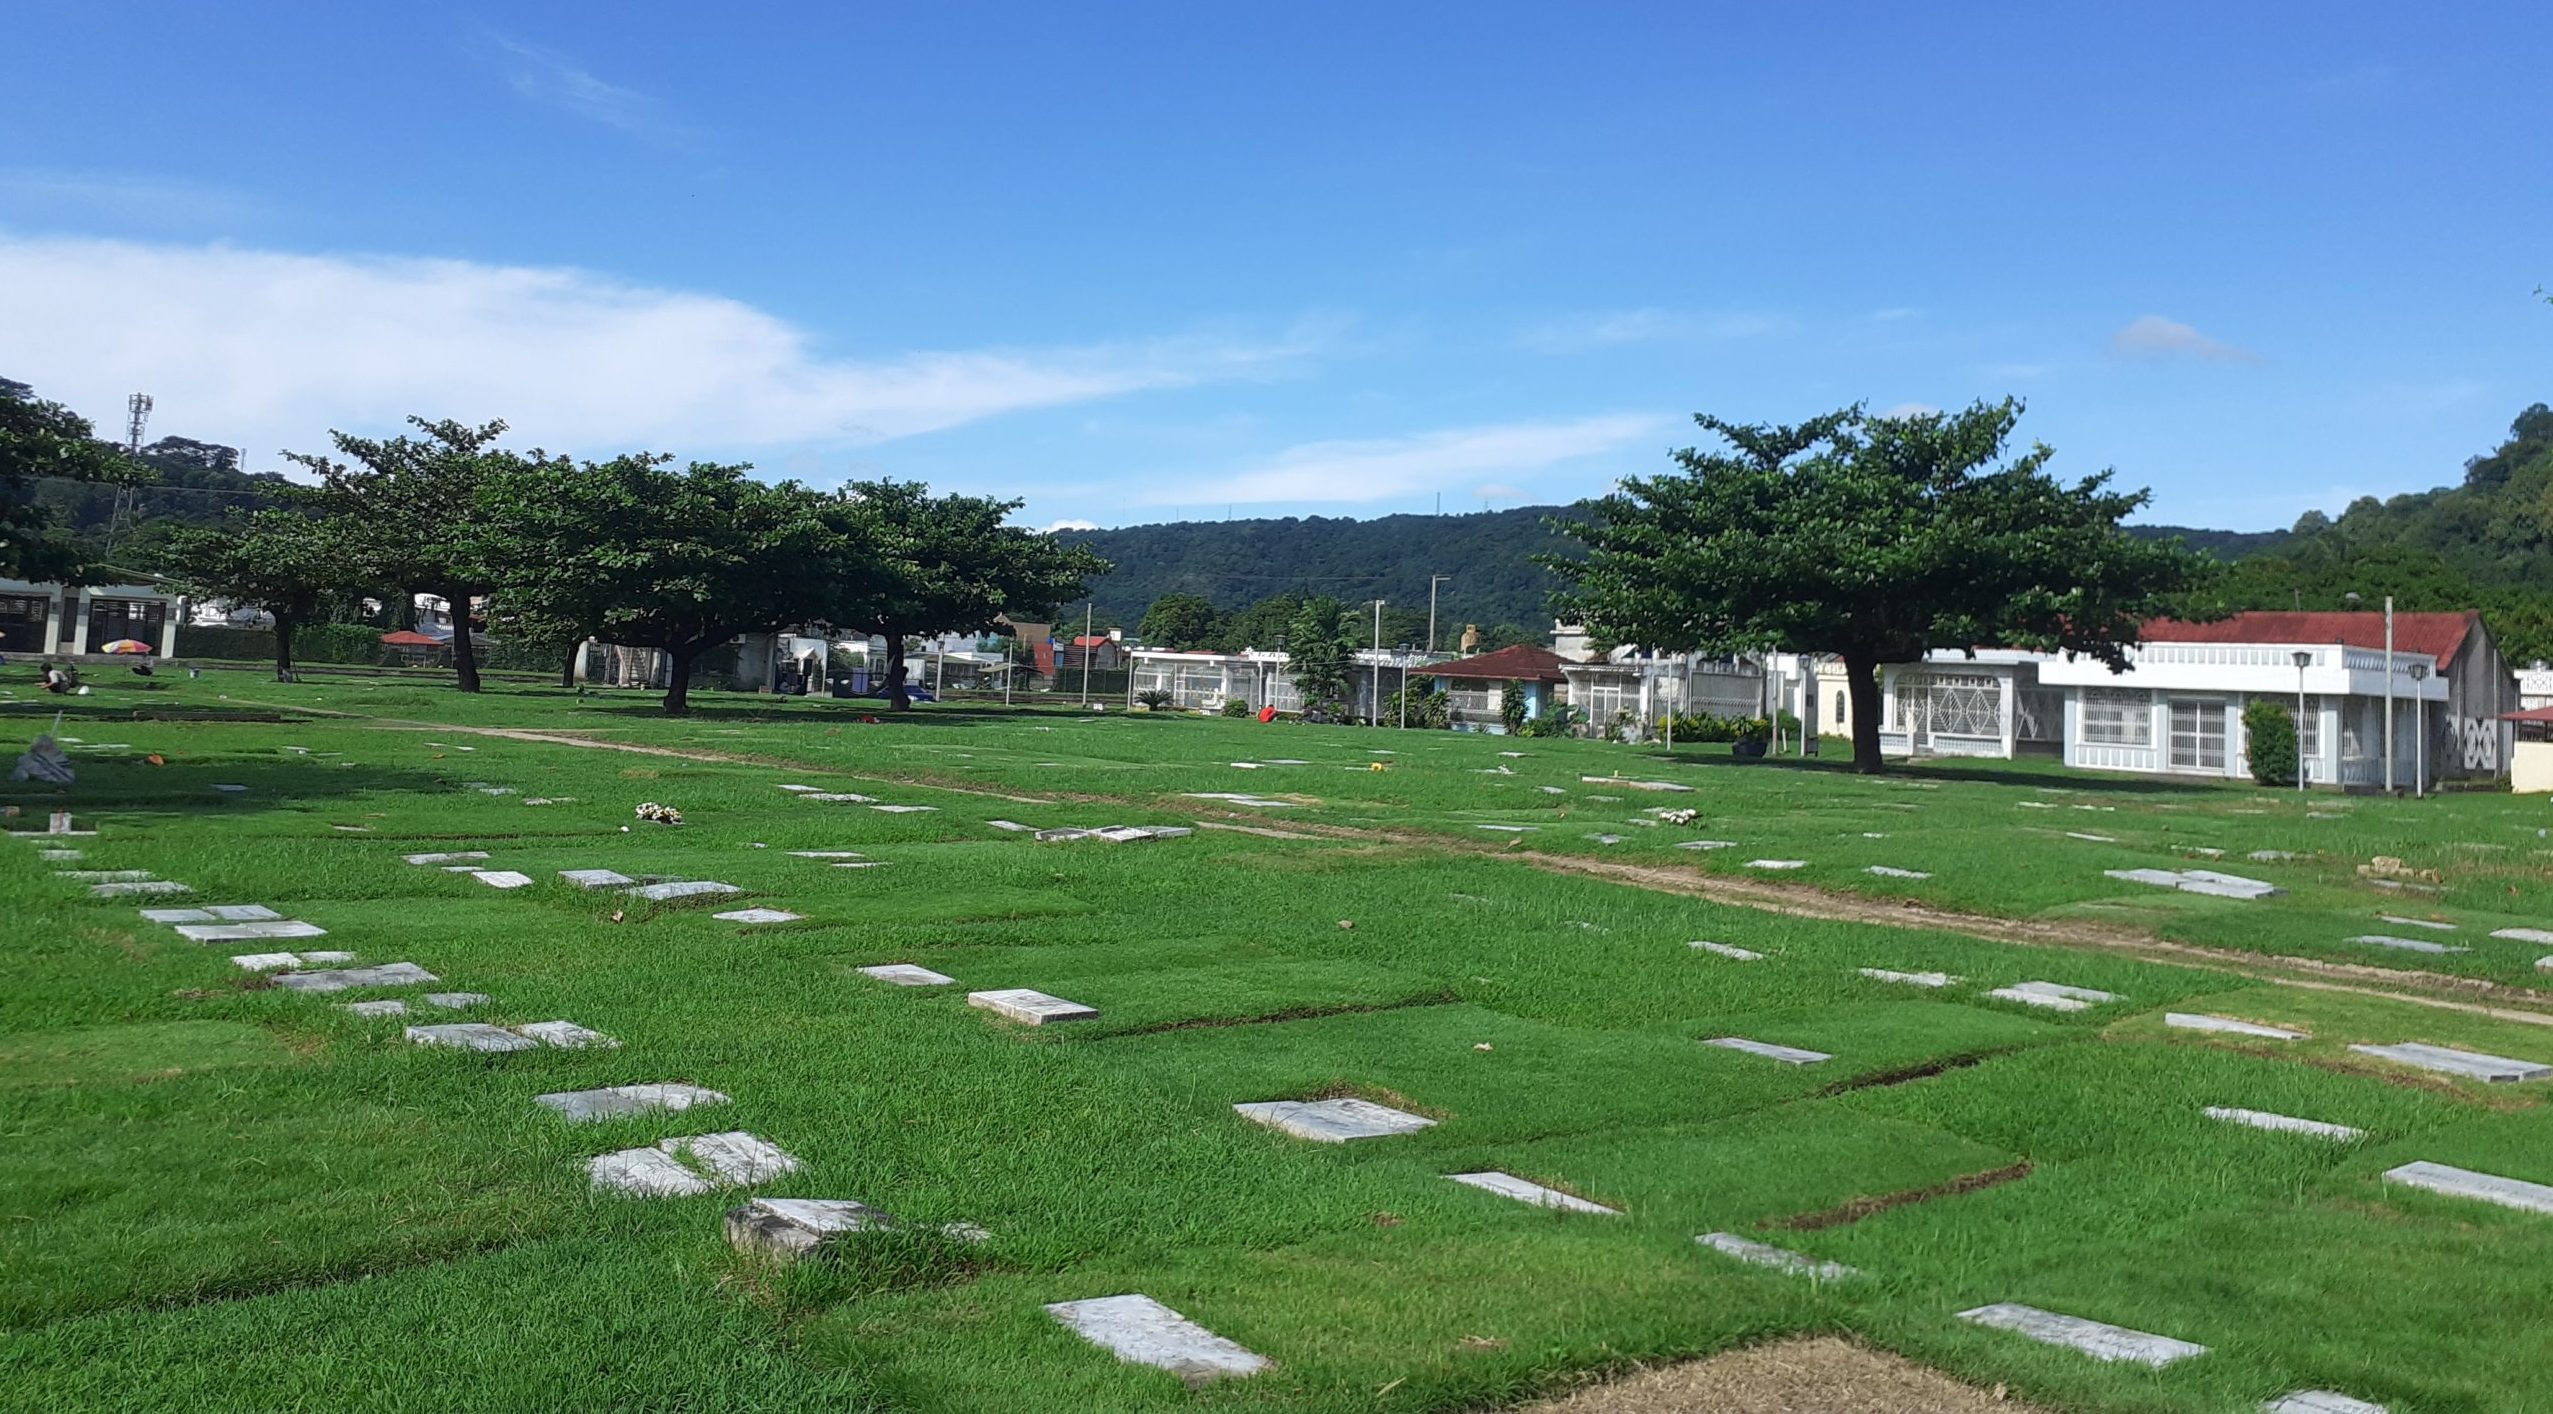 Zambales folk told to avoid visit to cemeteries during 'Undas'